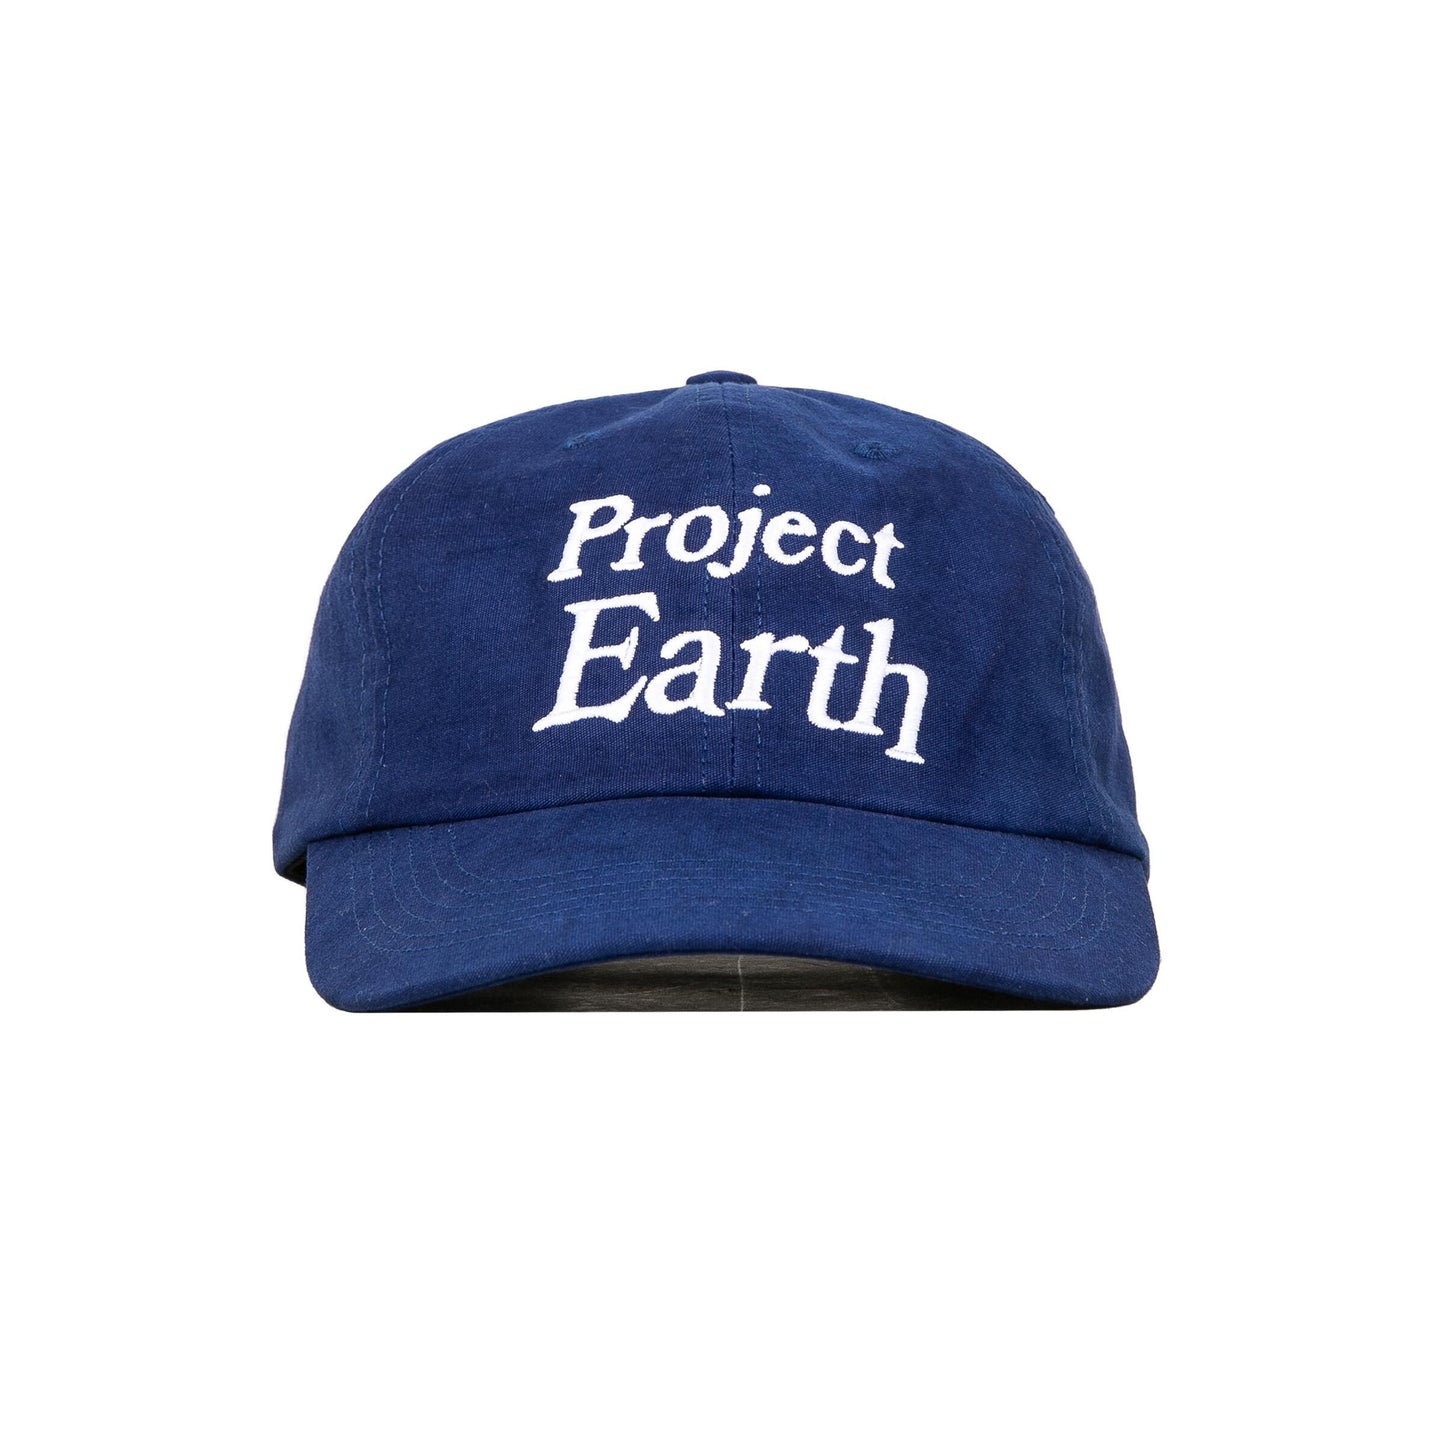 Project Earth Cap - Indigo